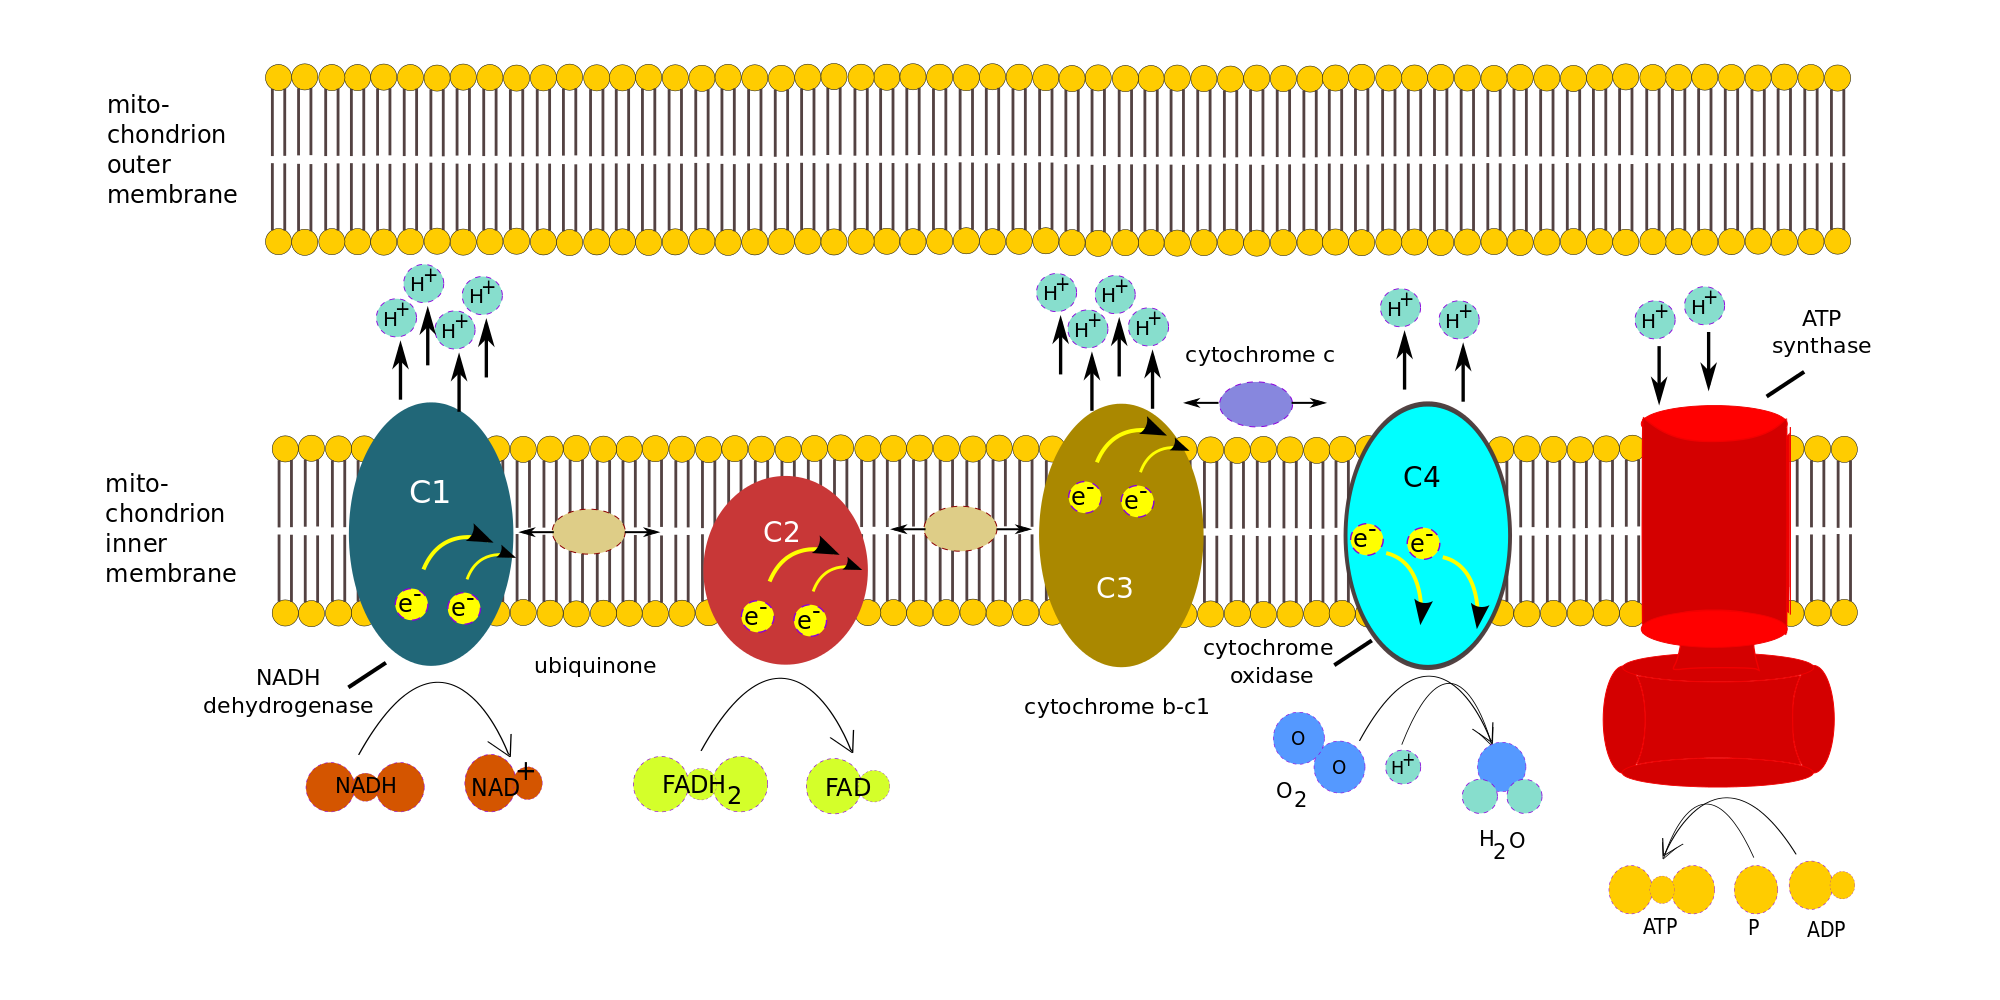 Oxidative phosphorylation (electron transport chain), author's own work